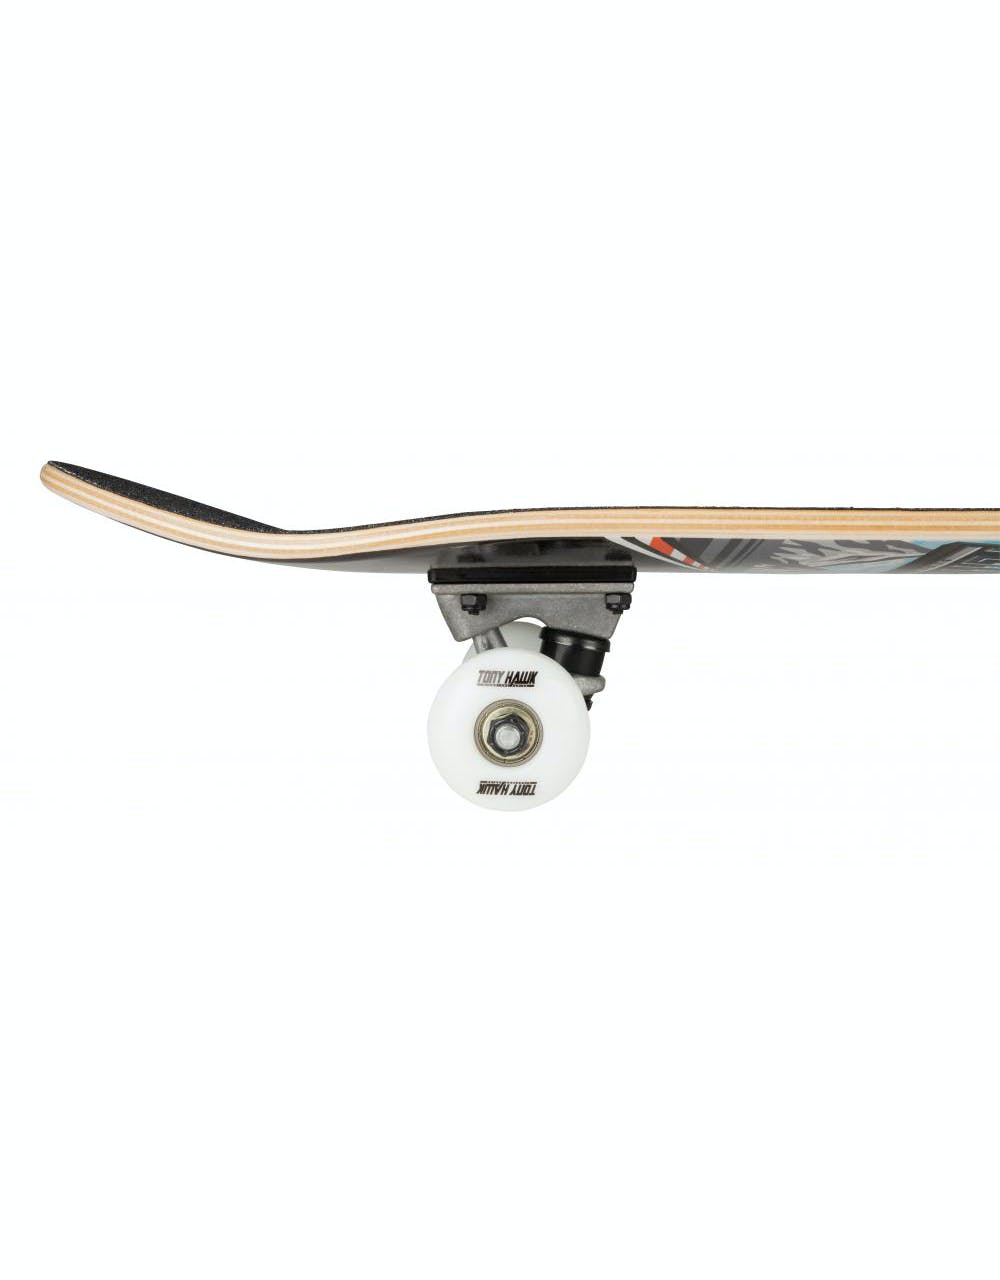 Tony Hawk 180 Outrun Complete Skateboard - 7.75"